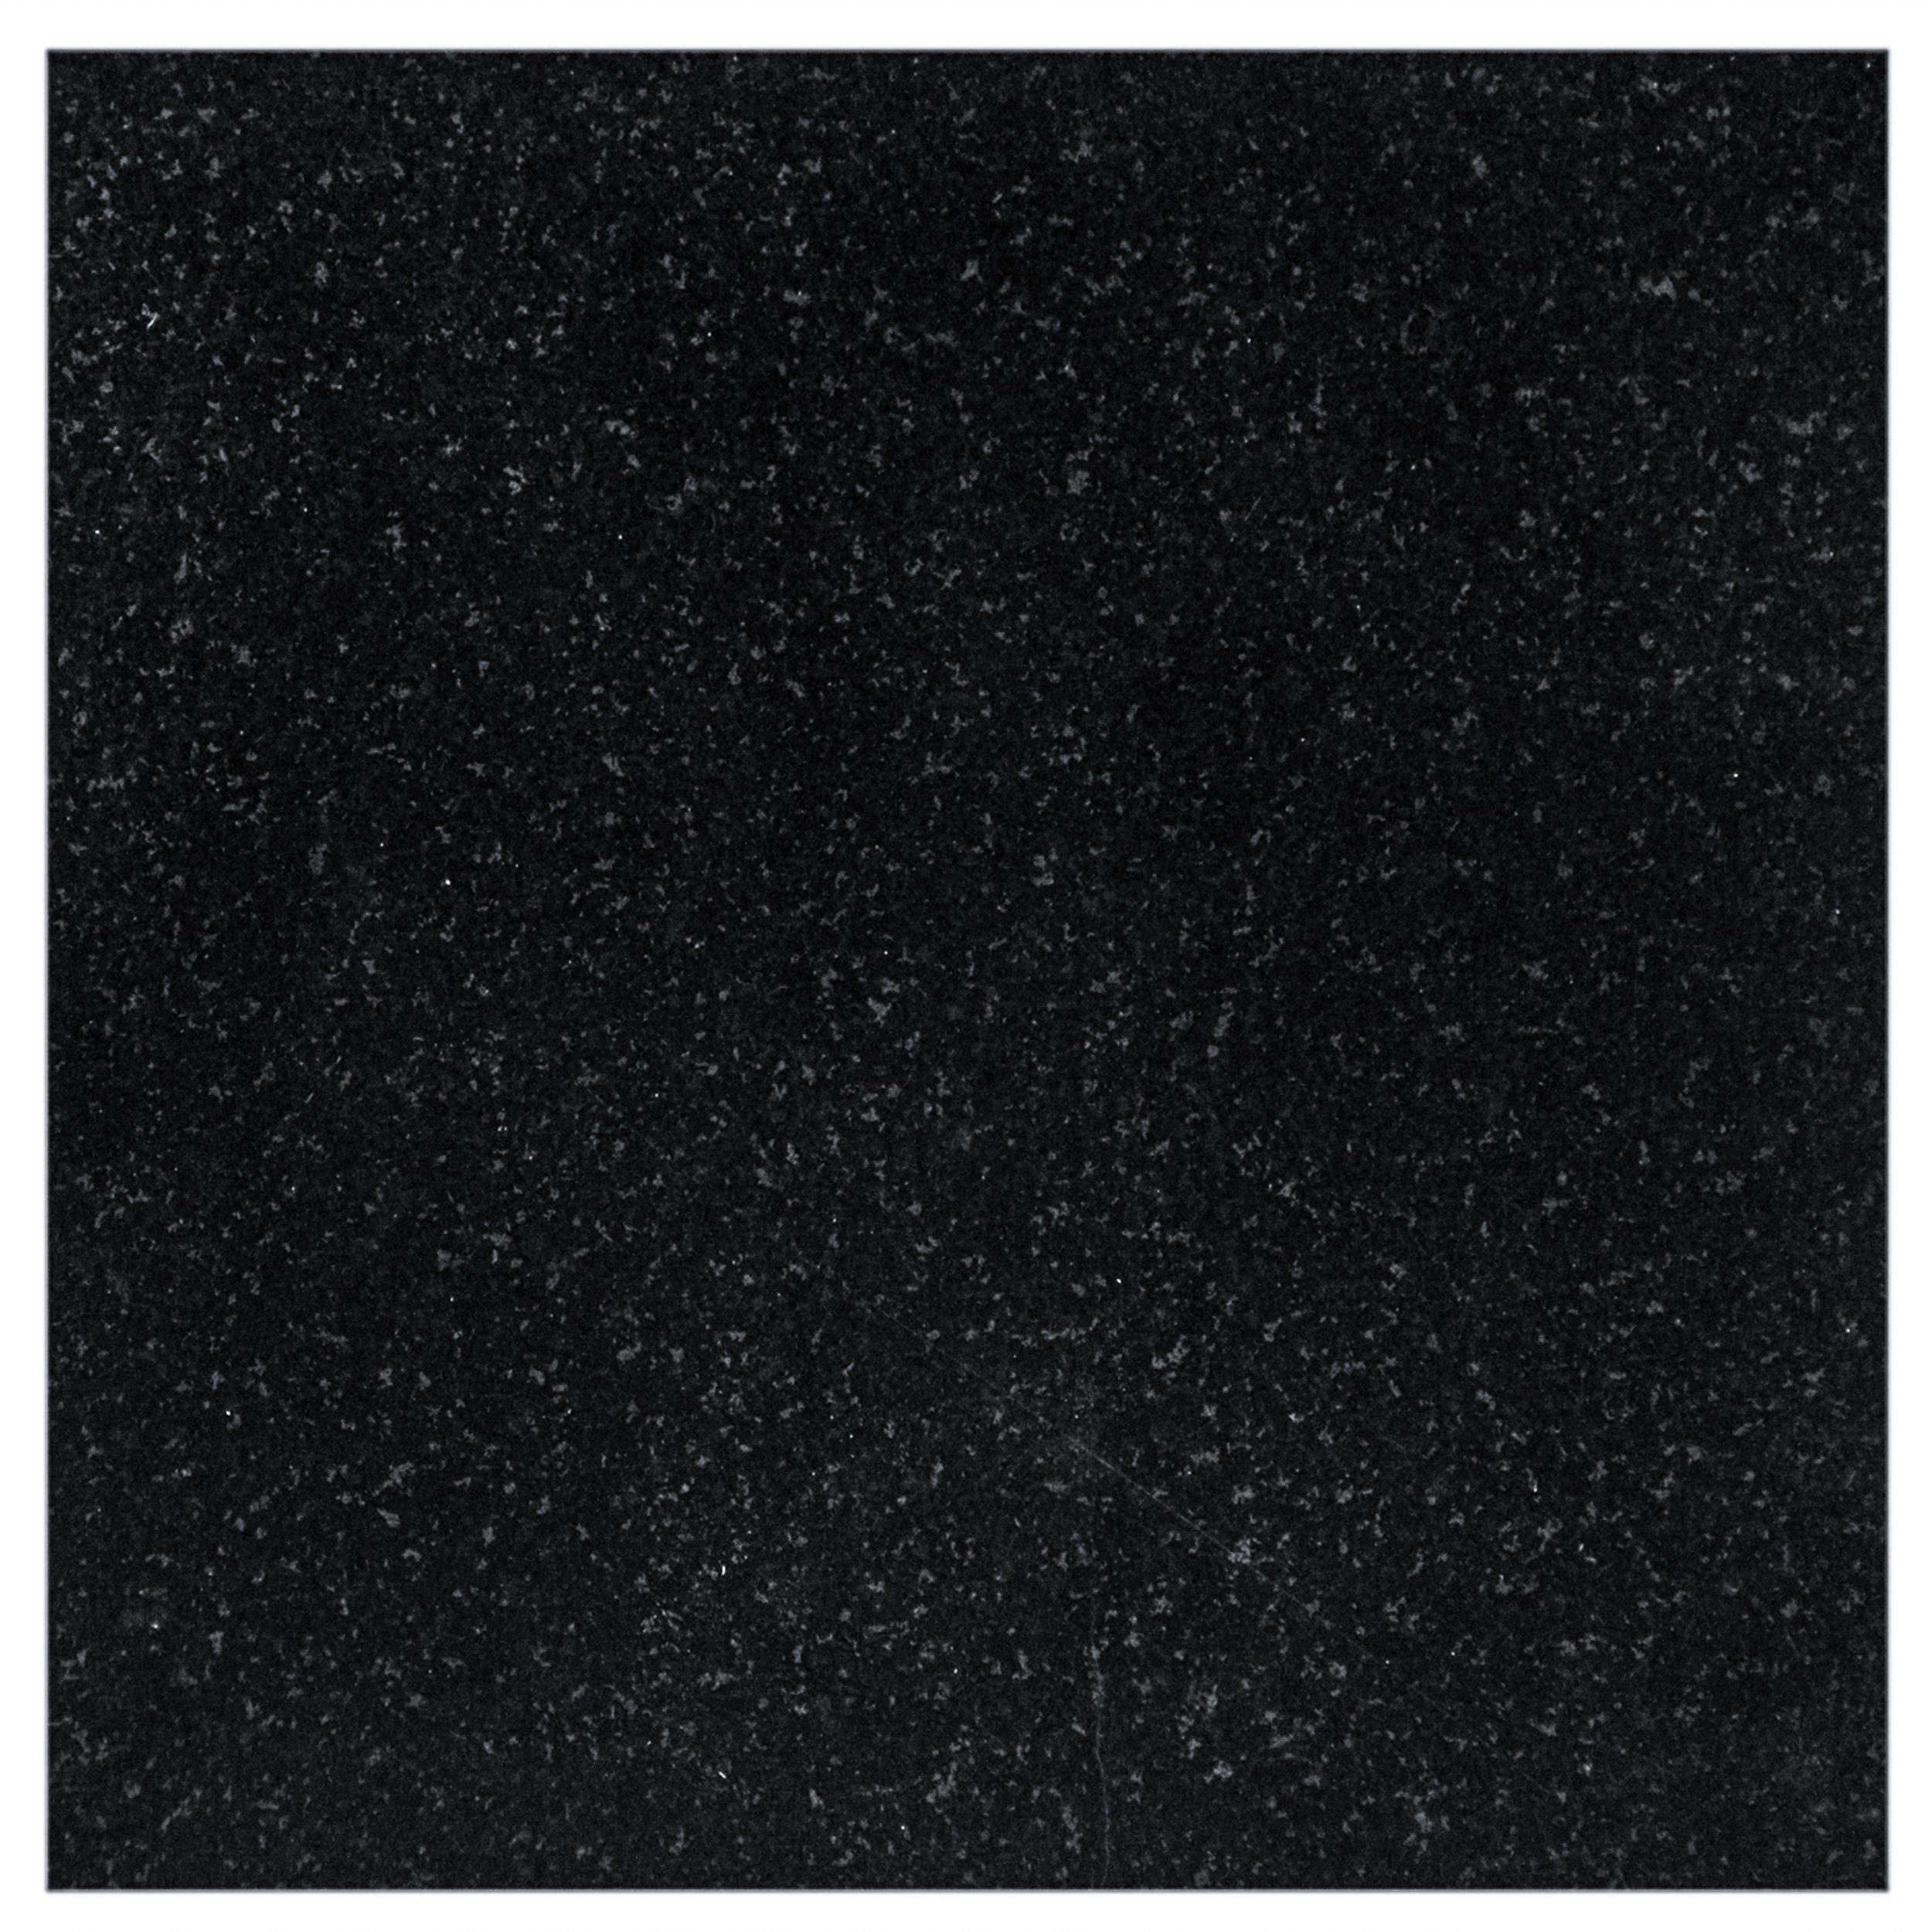 Absolute Black Granite Tile 12 x12, $5.95 /sq. ft